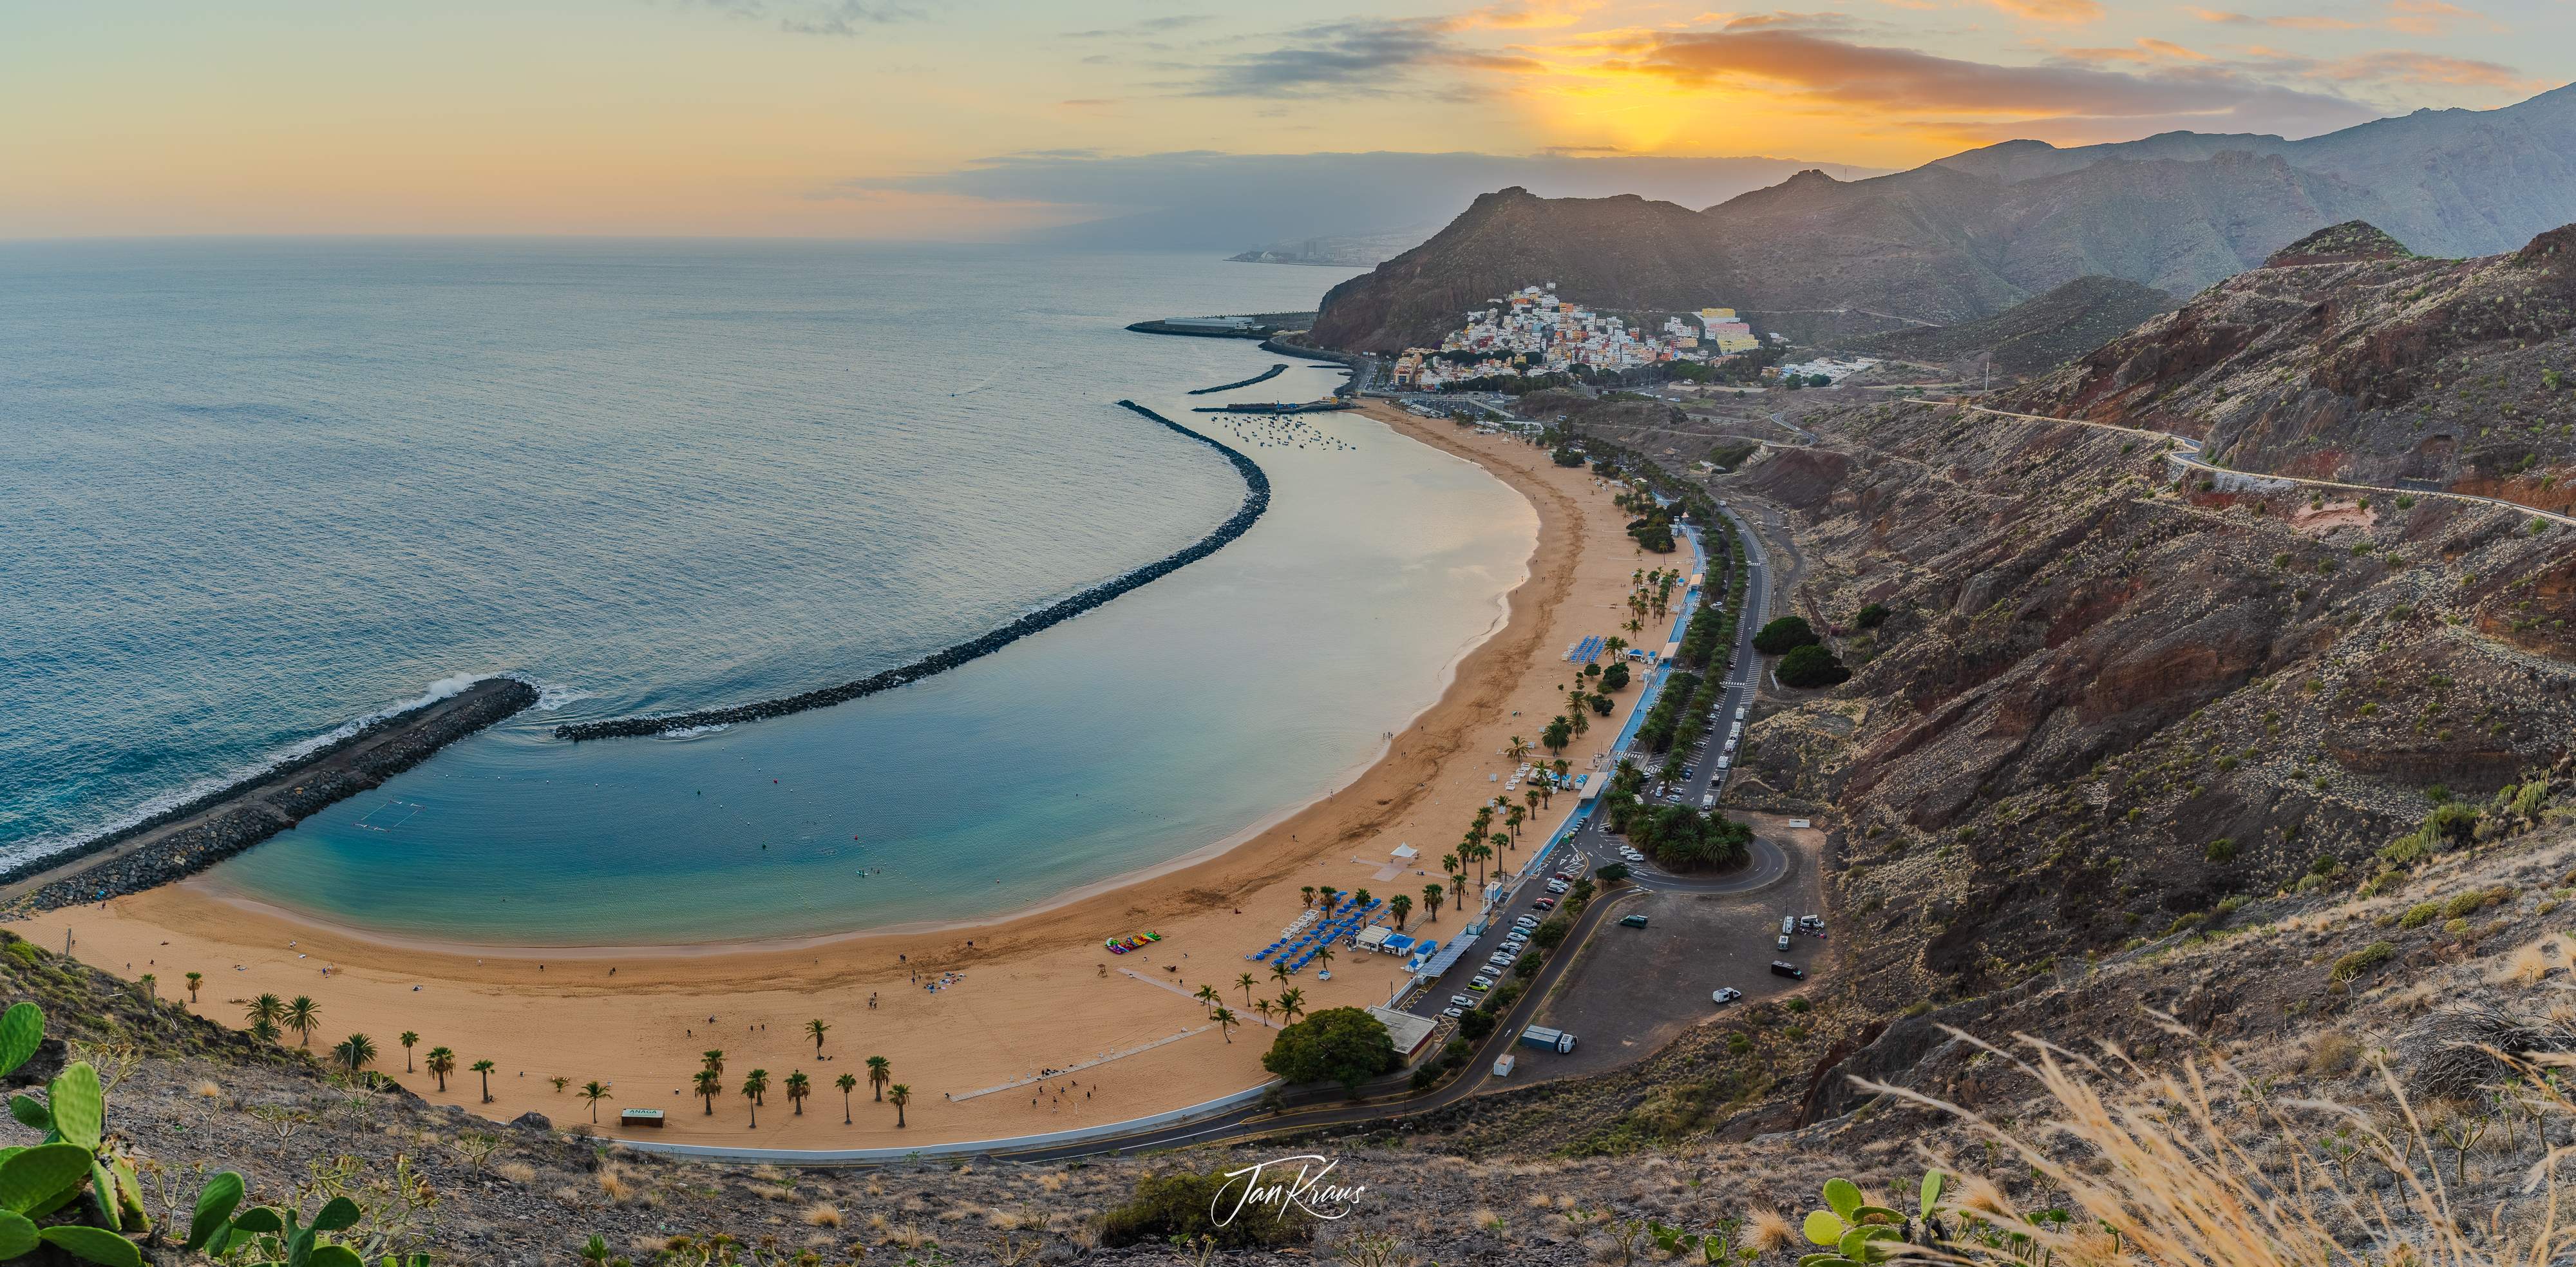 A view of Playa de las Teresitas from the Mirador Playa de las Teresitas, Tenerife, Canary Islands, Spain